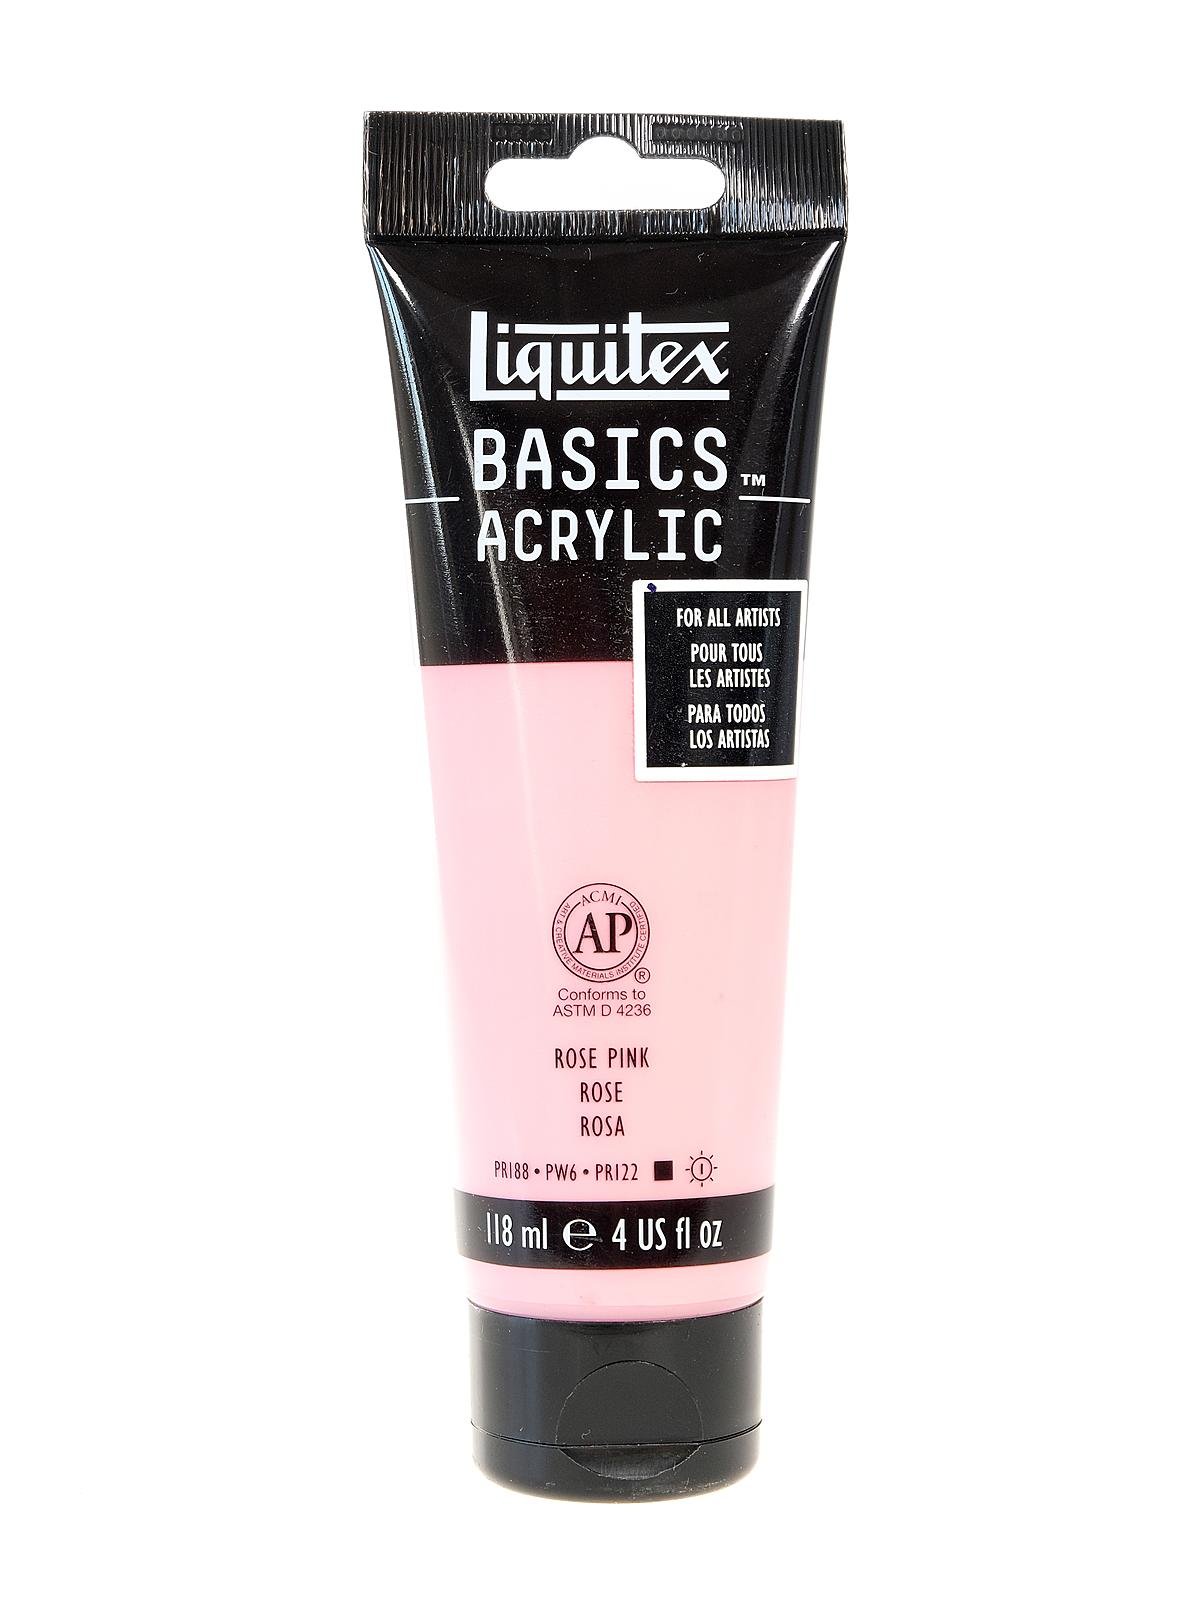 Liquitex Basics Acrylic Paint - Fluorescent Pink, 4oz Tube